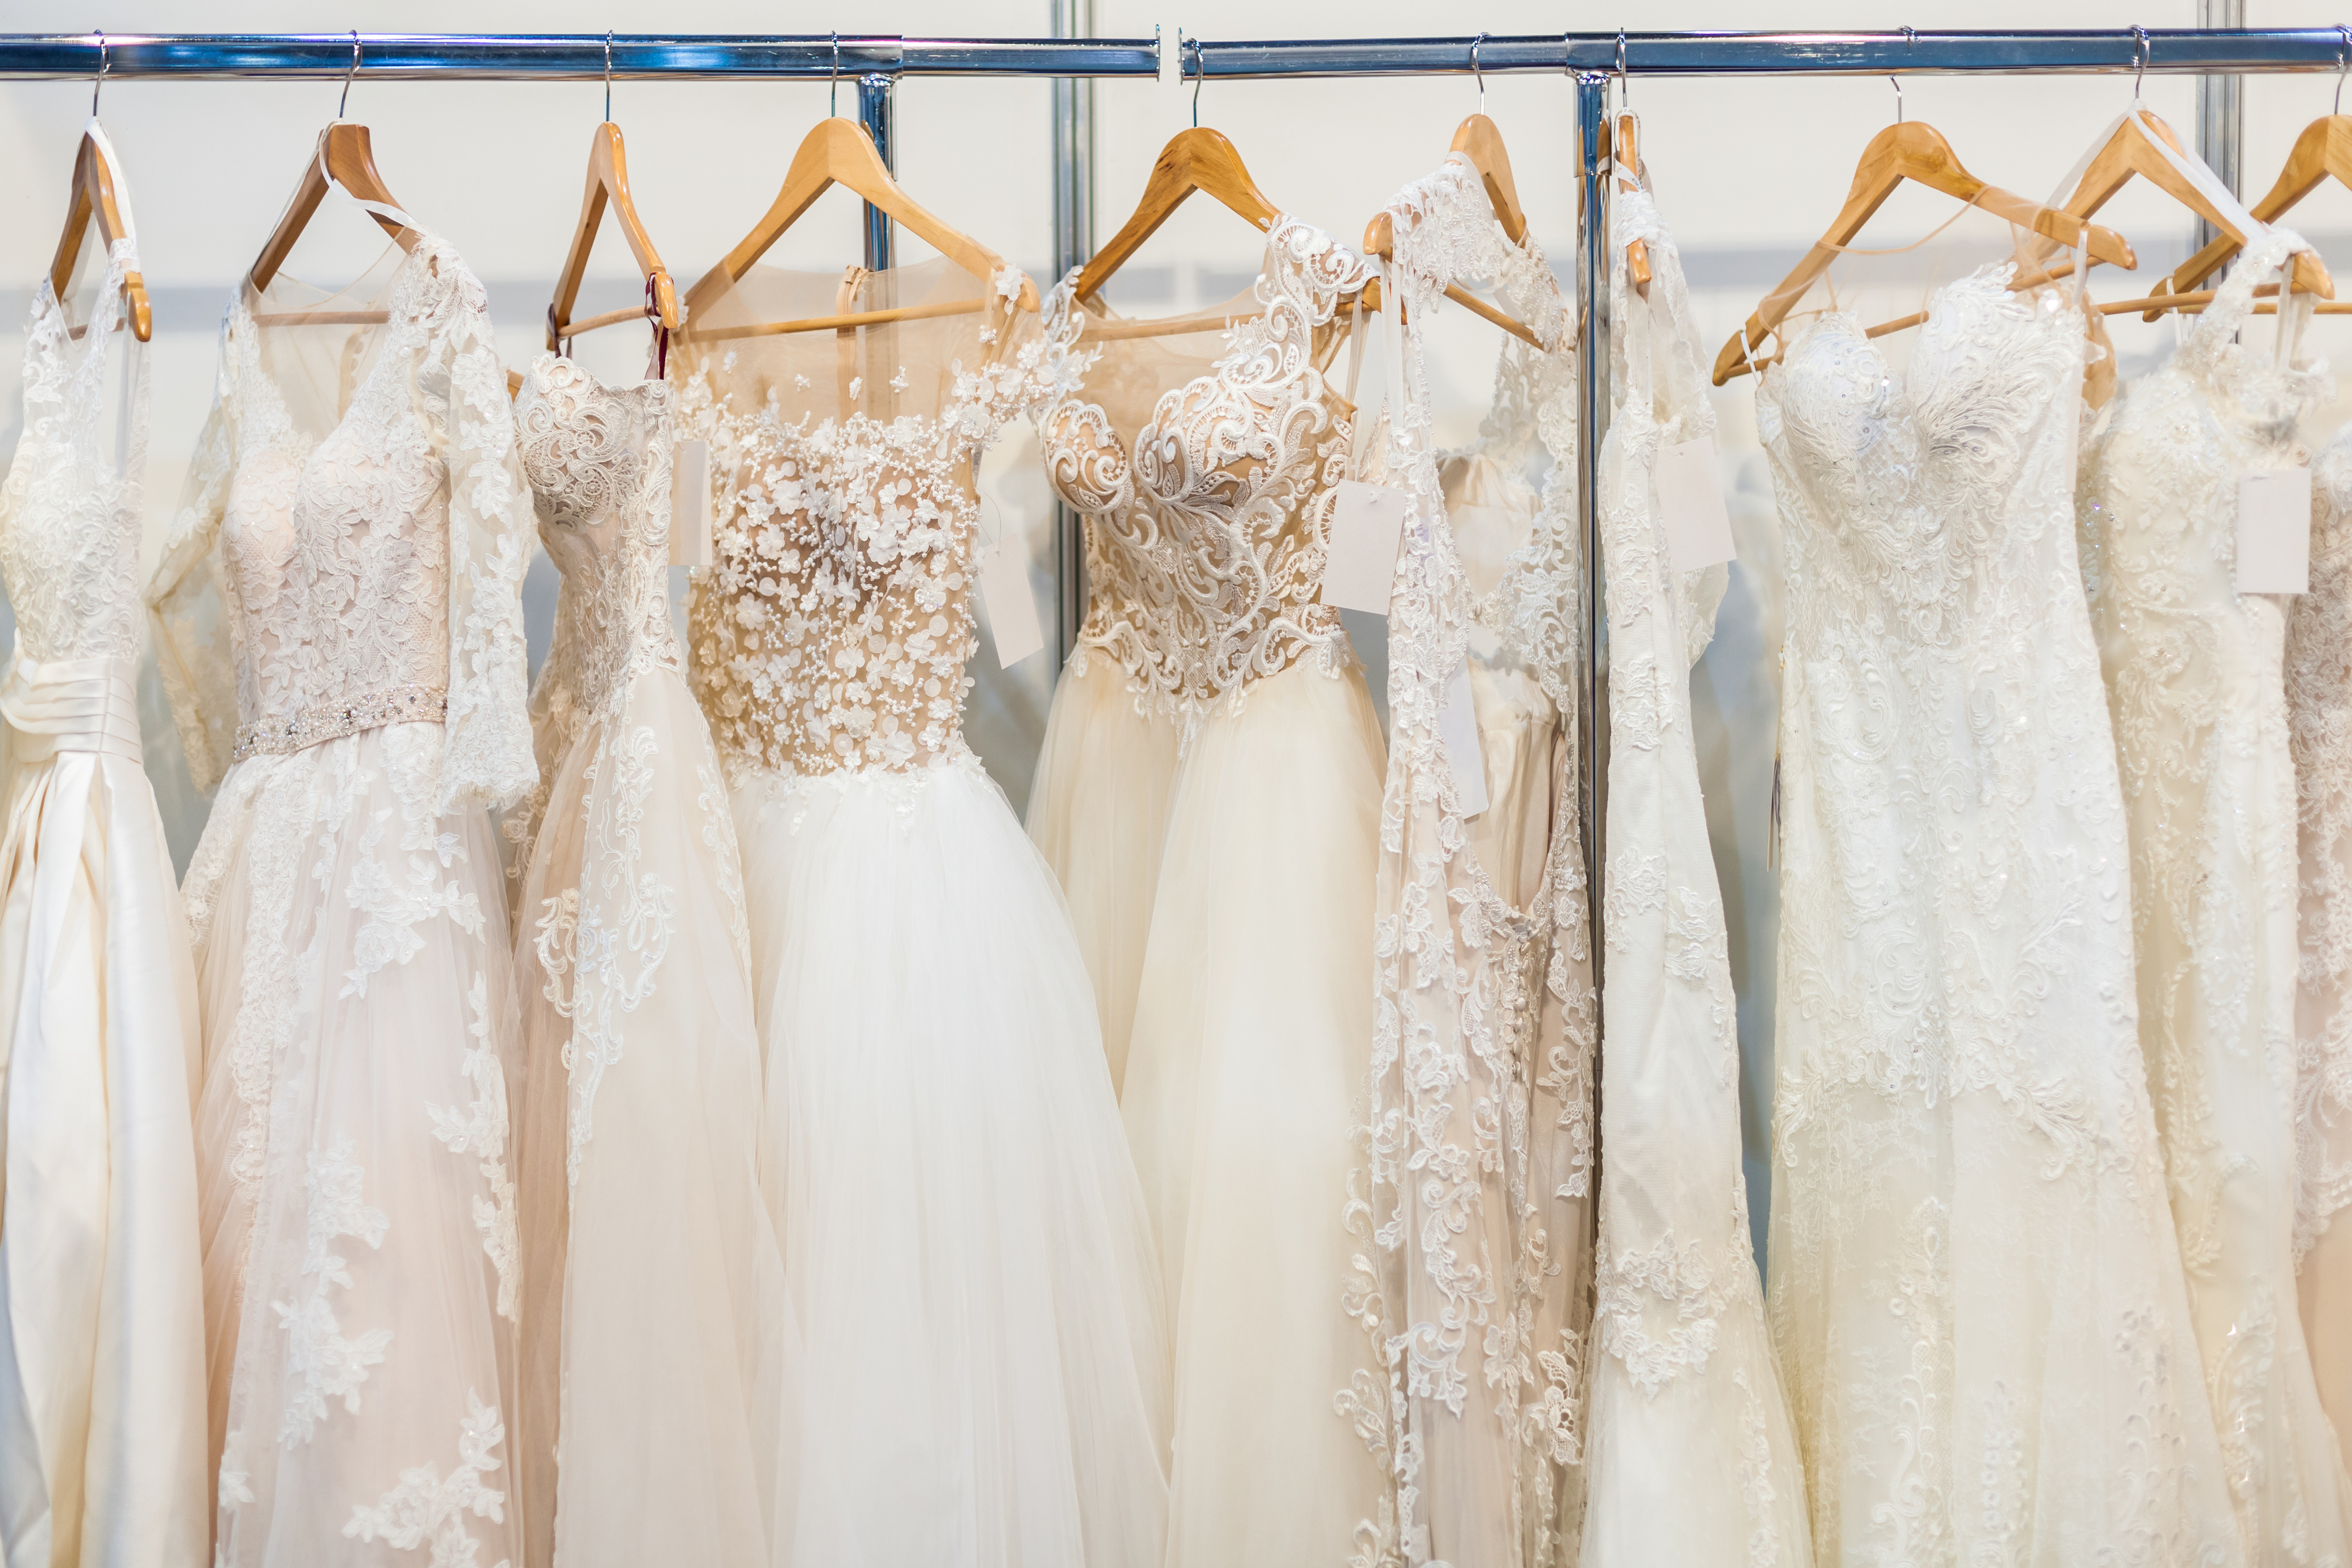 Bridal dresses hanging on a rack